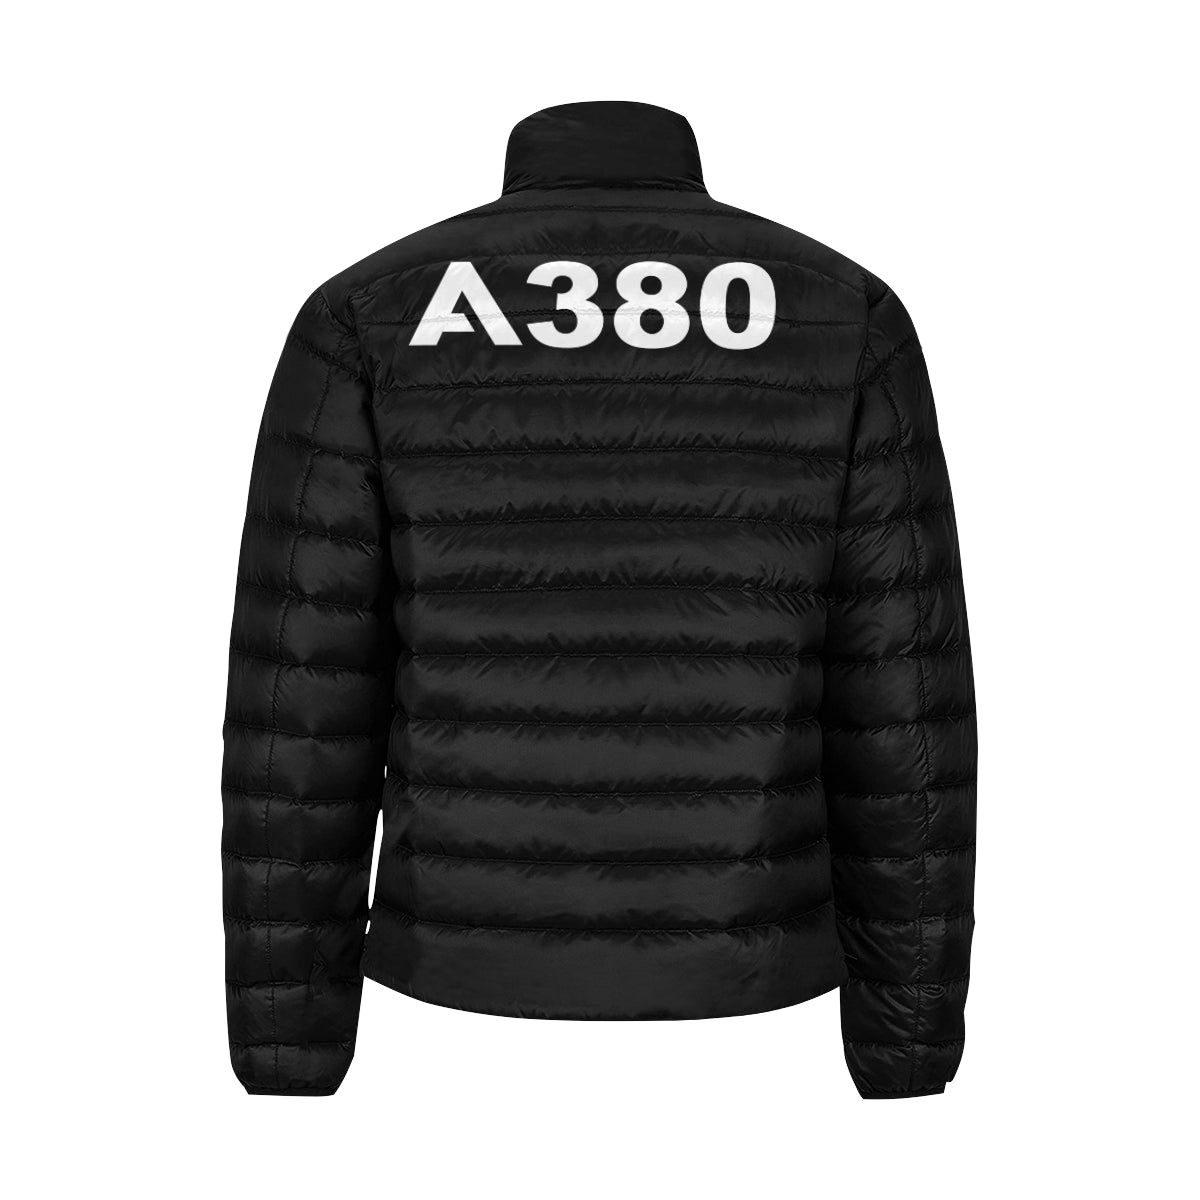 AIRBUS 380 Men's Stand Collar Padded Jacket e-joyer